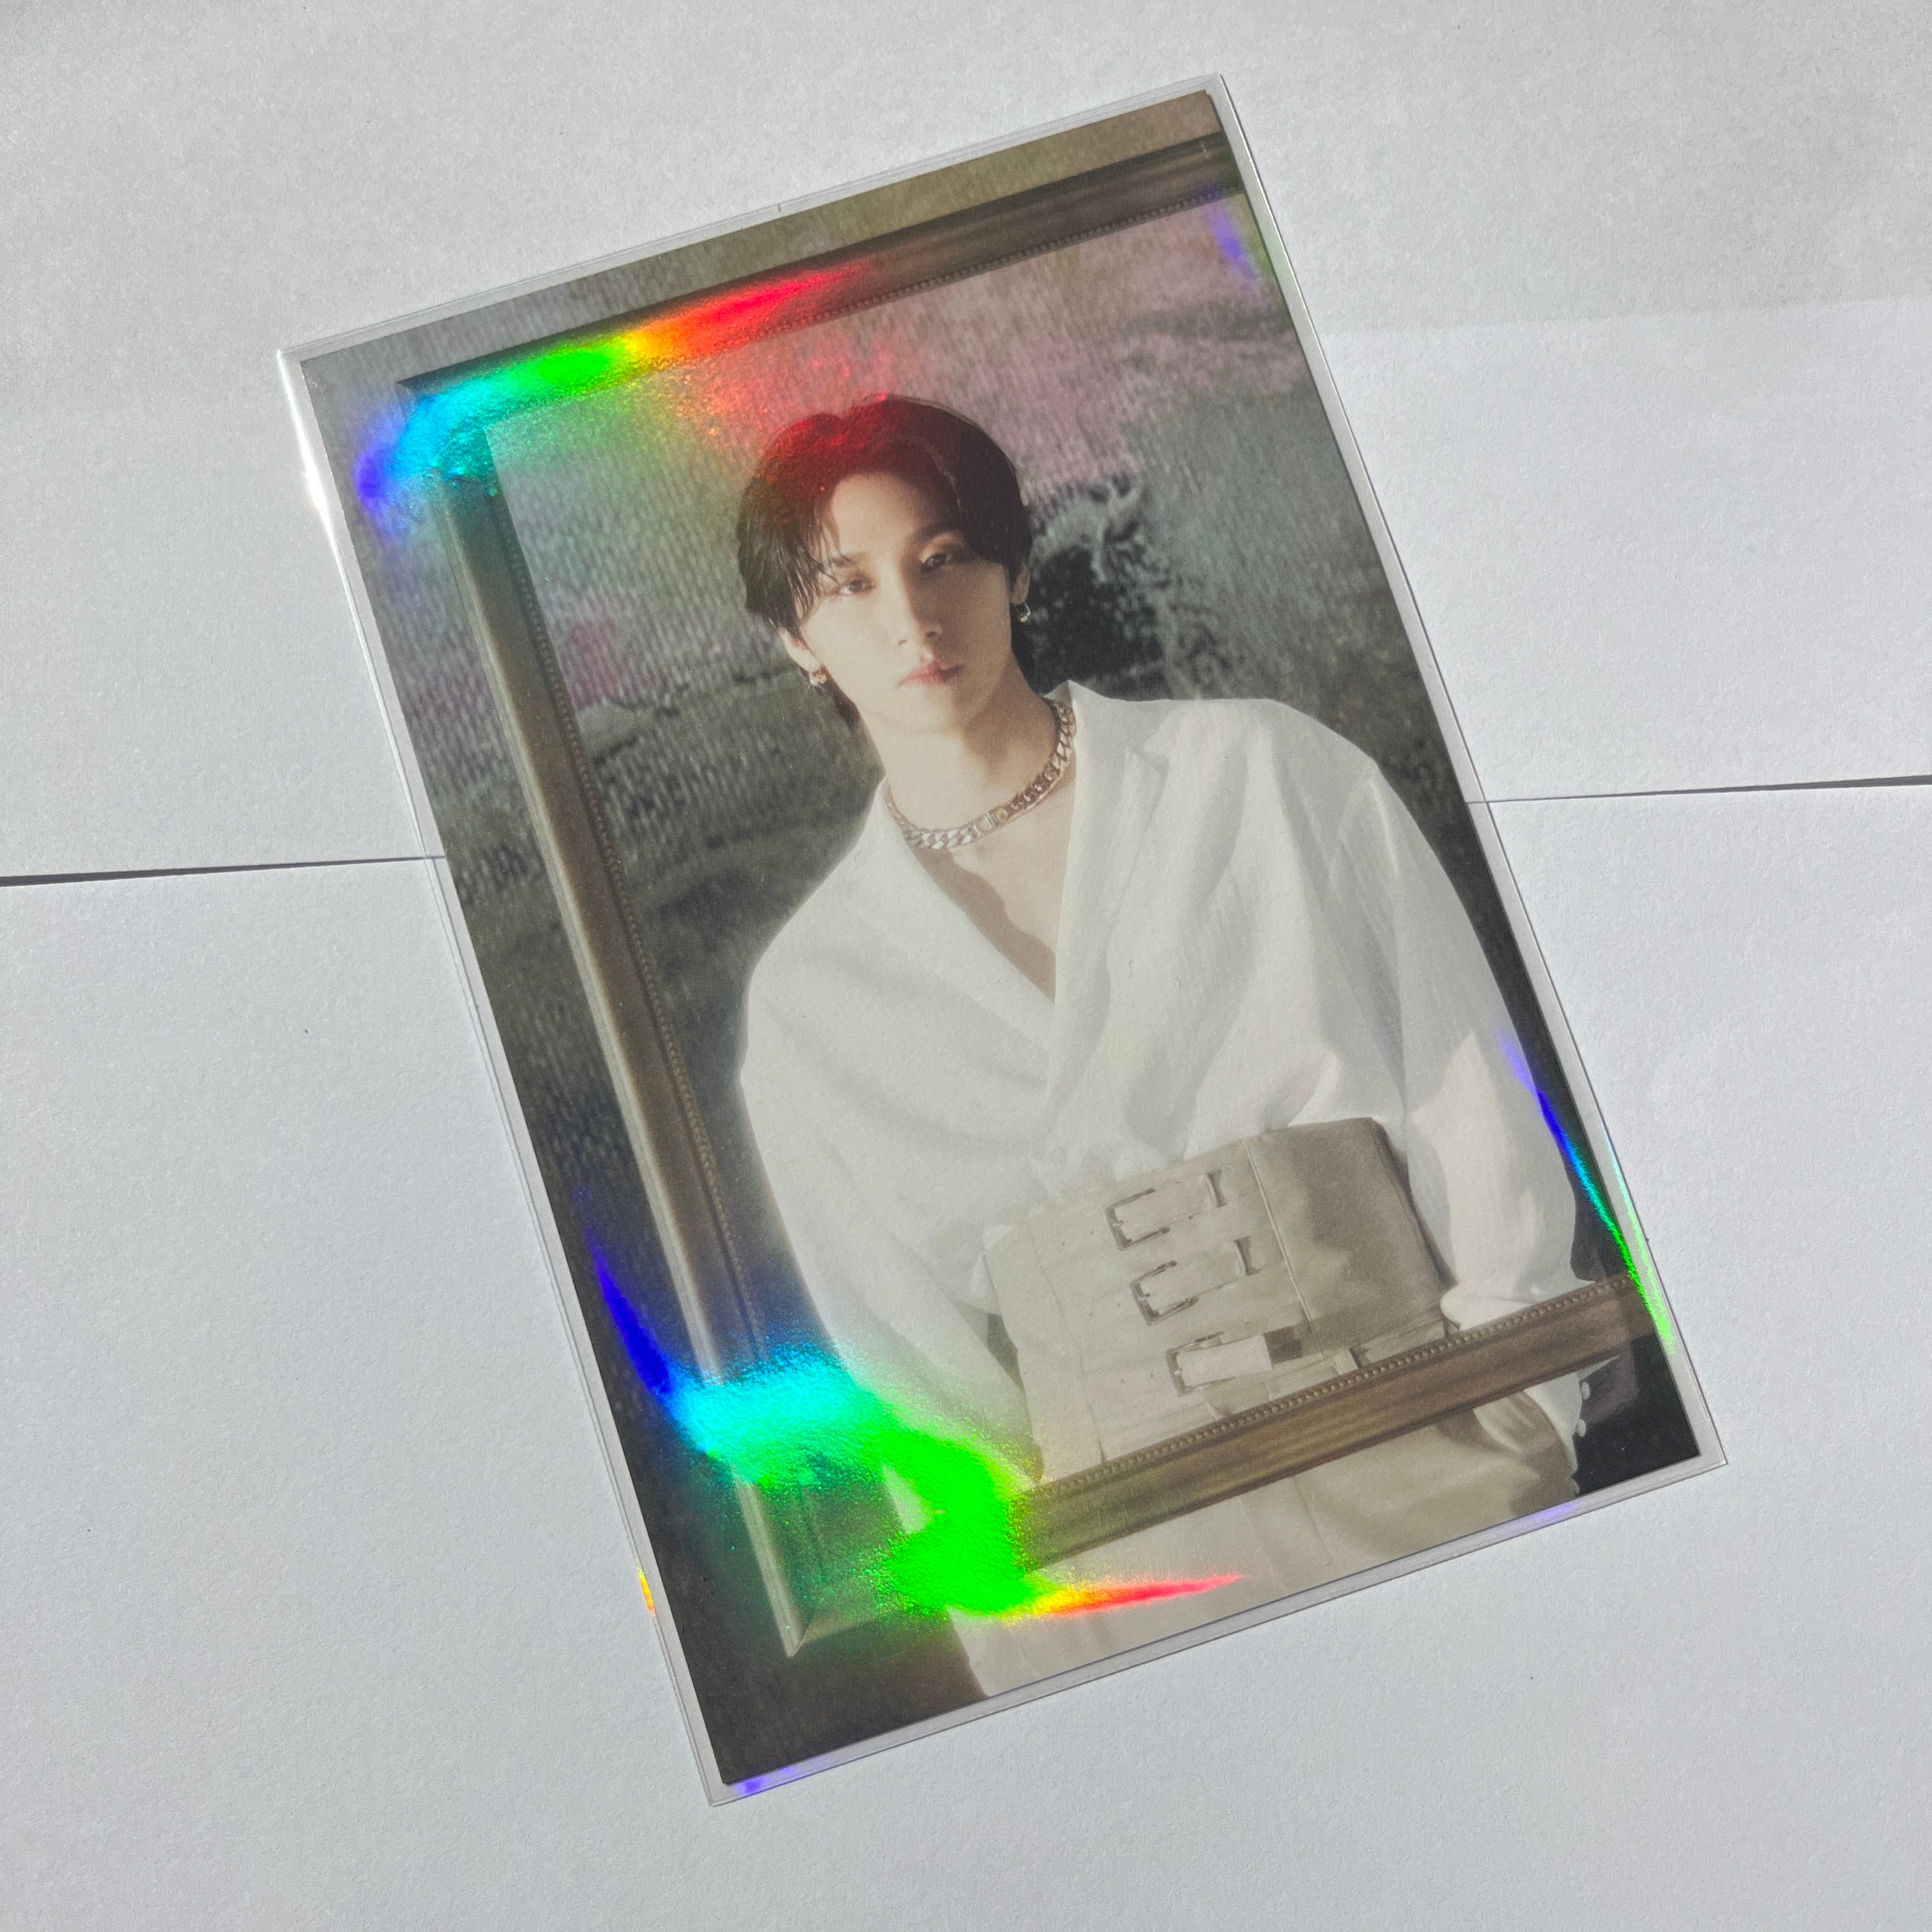 [104x153mm] Meowcafe Premium Holographic CPP Photocard Sleeve - [Hologram Rainbow]